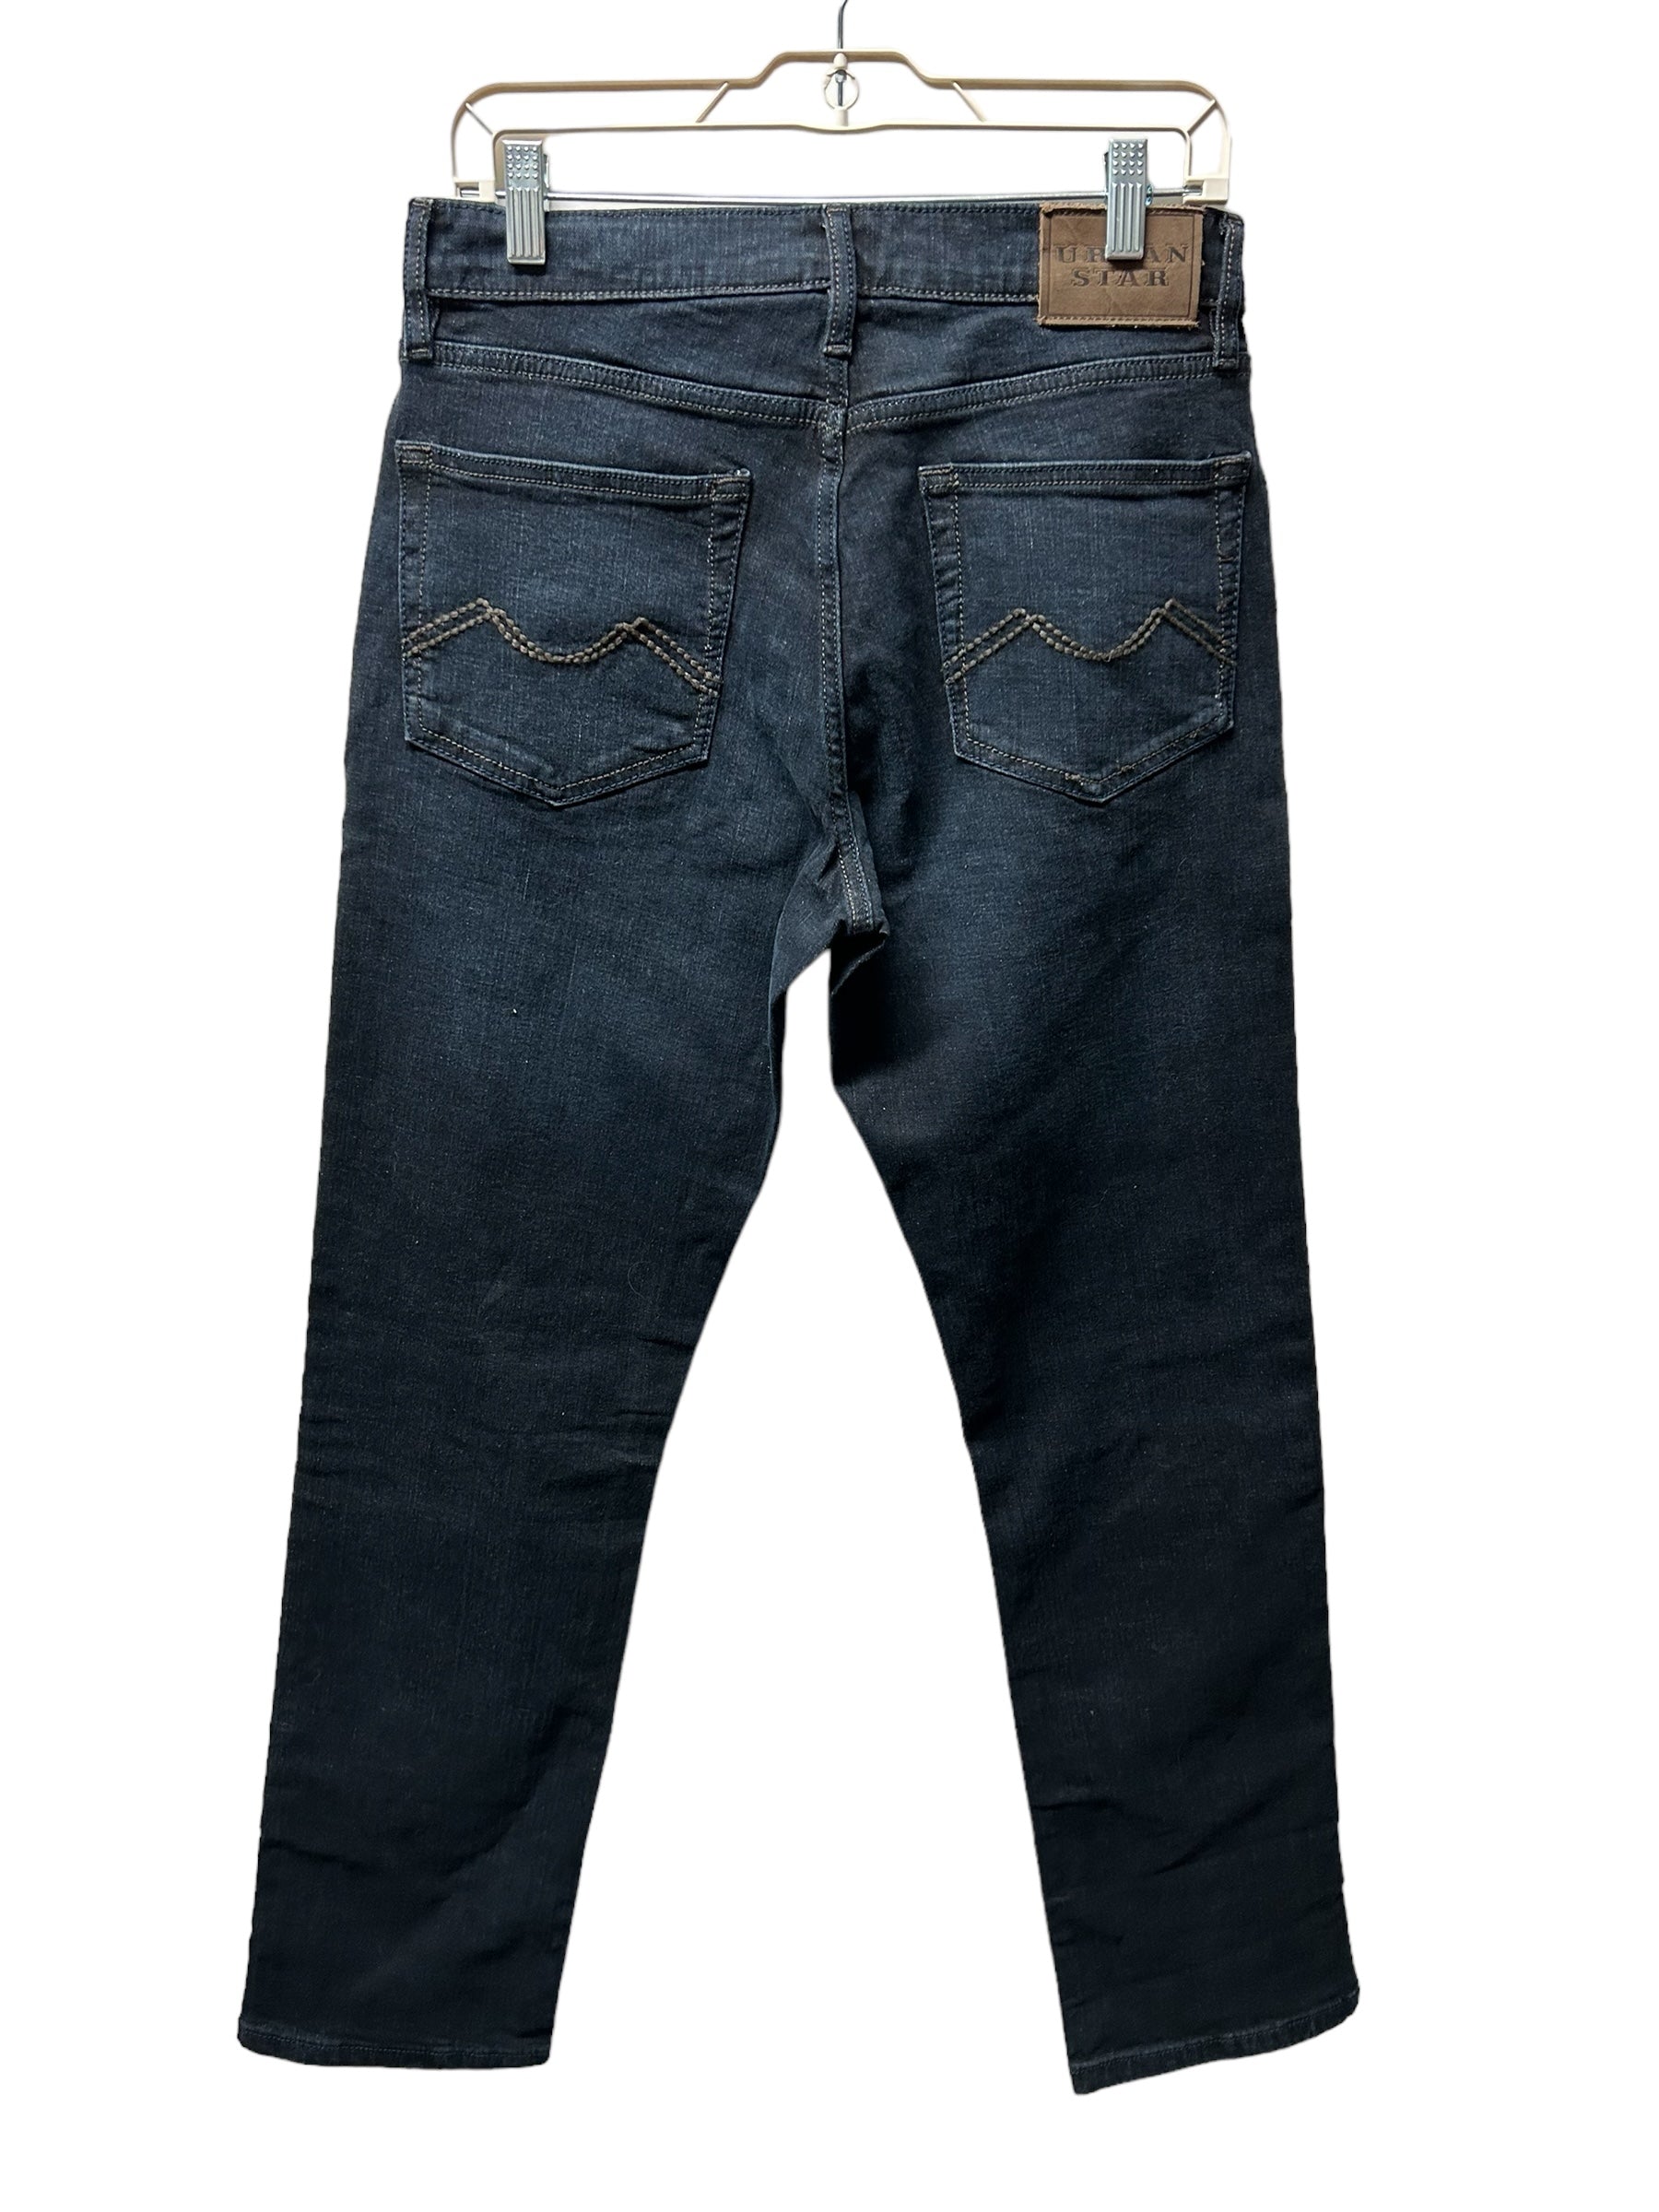 Urban Star Jeans (30x32)